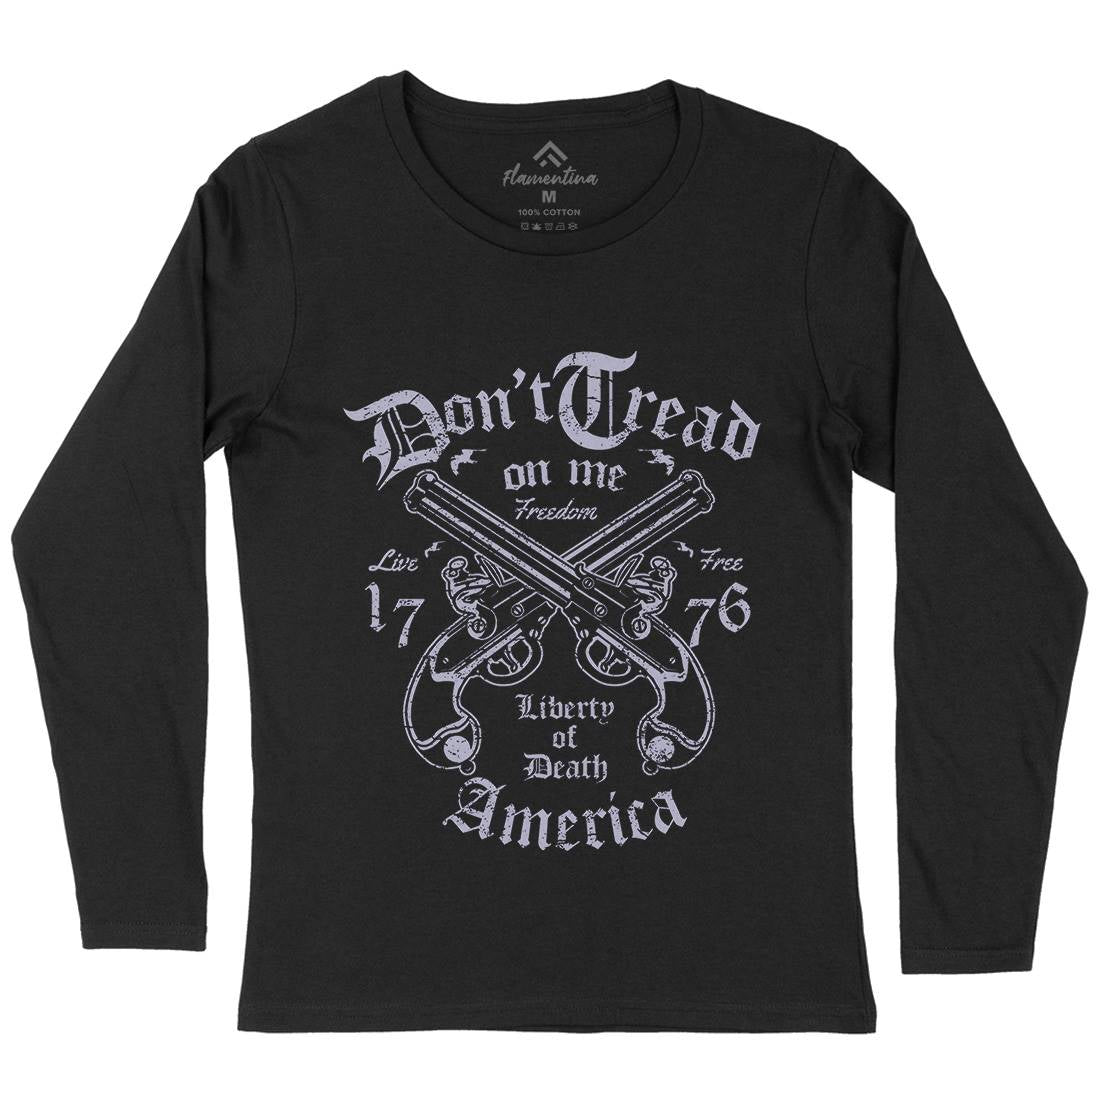 Liberty Of Death Womens Long Sleeve T-Shirt American A084